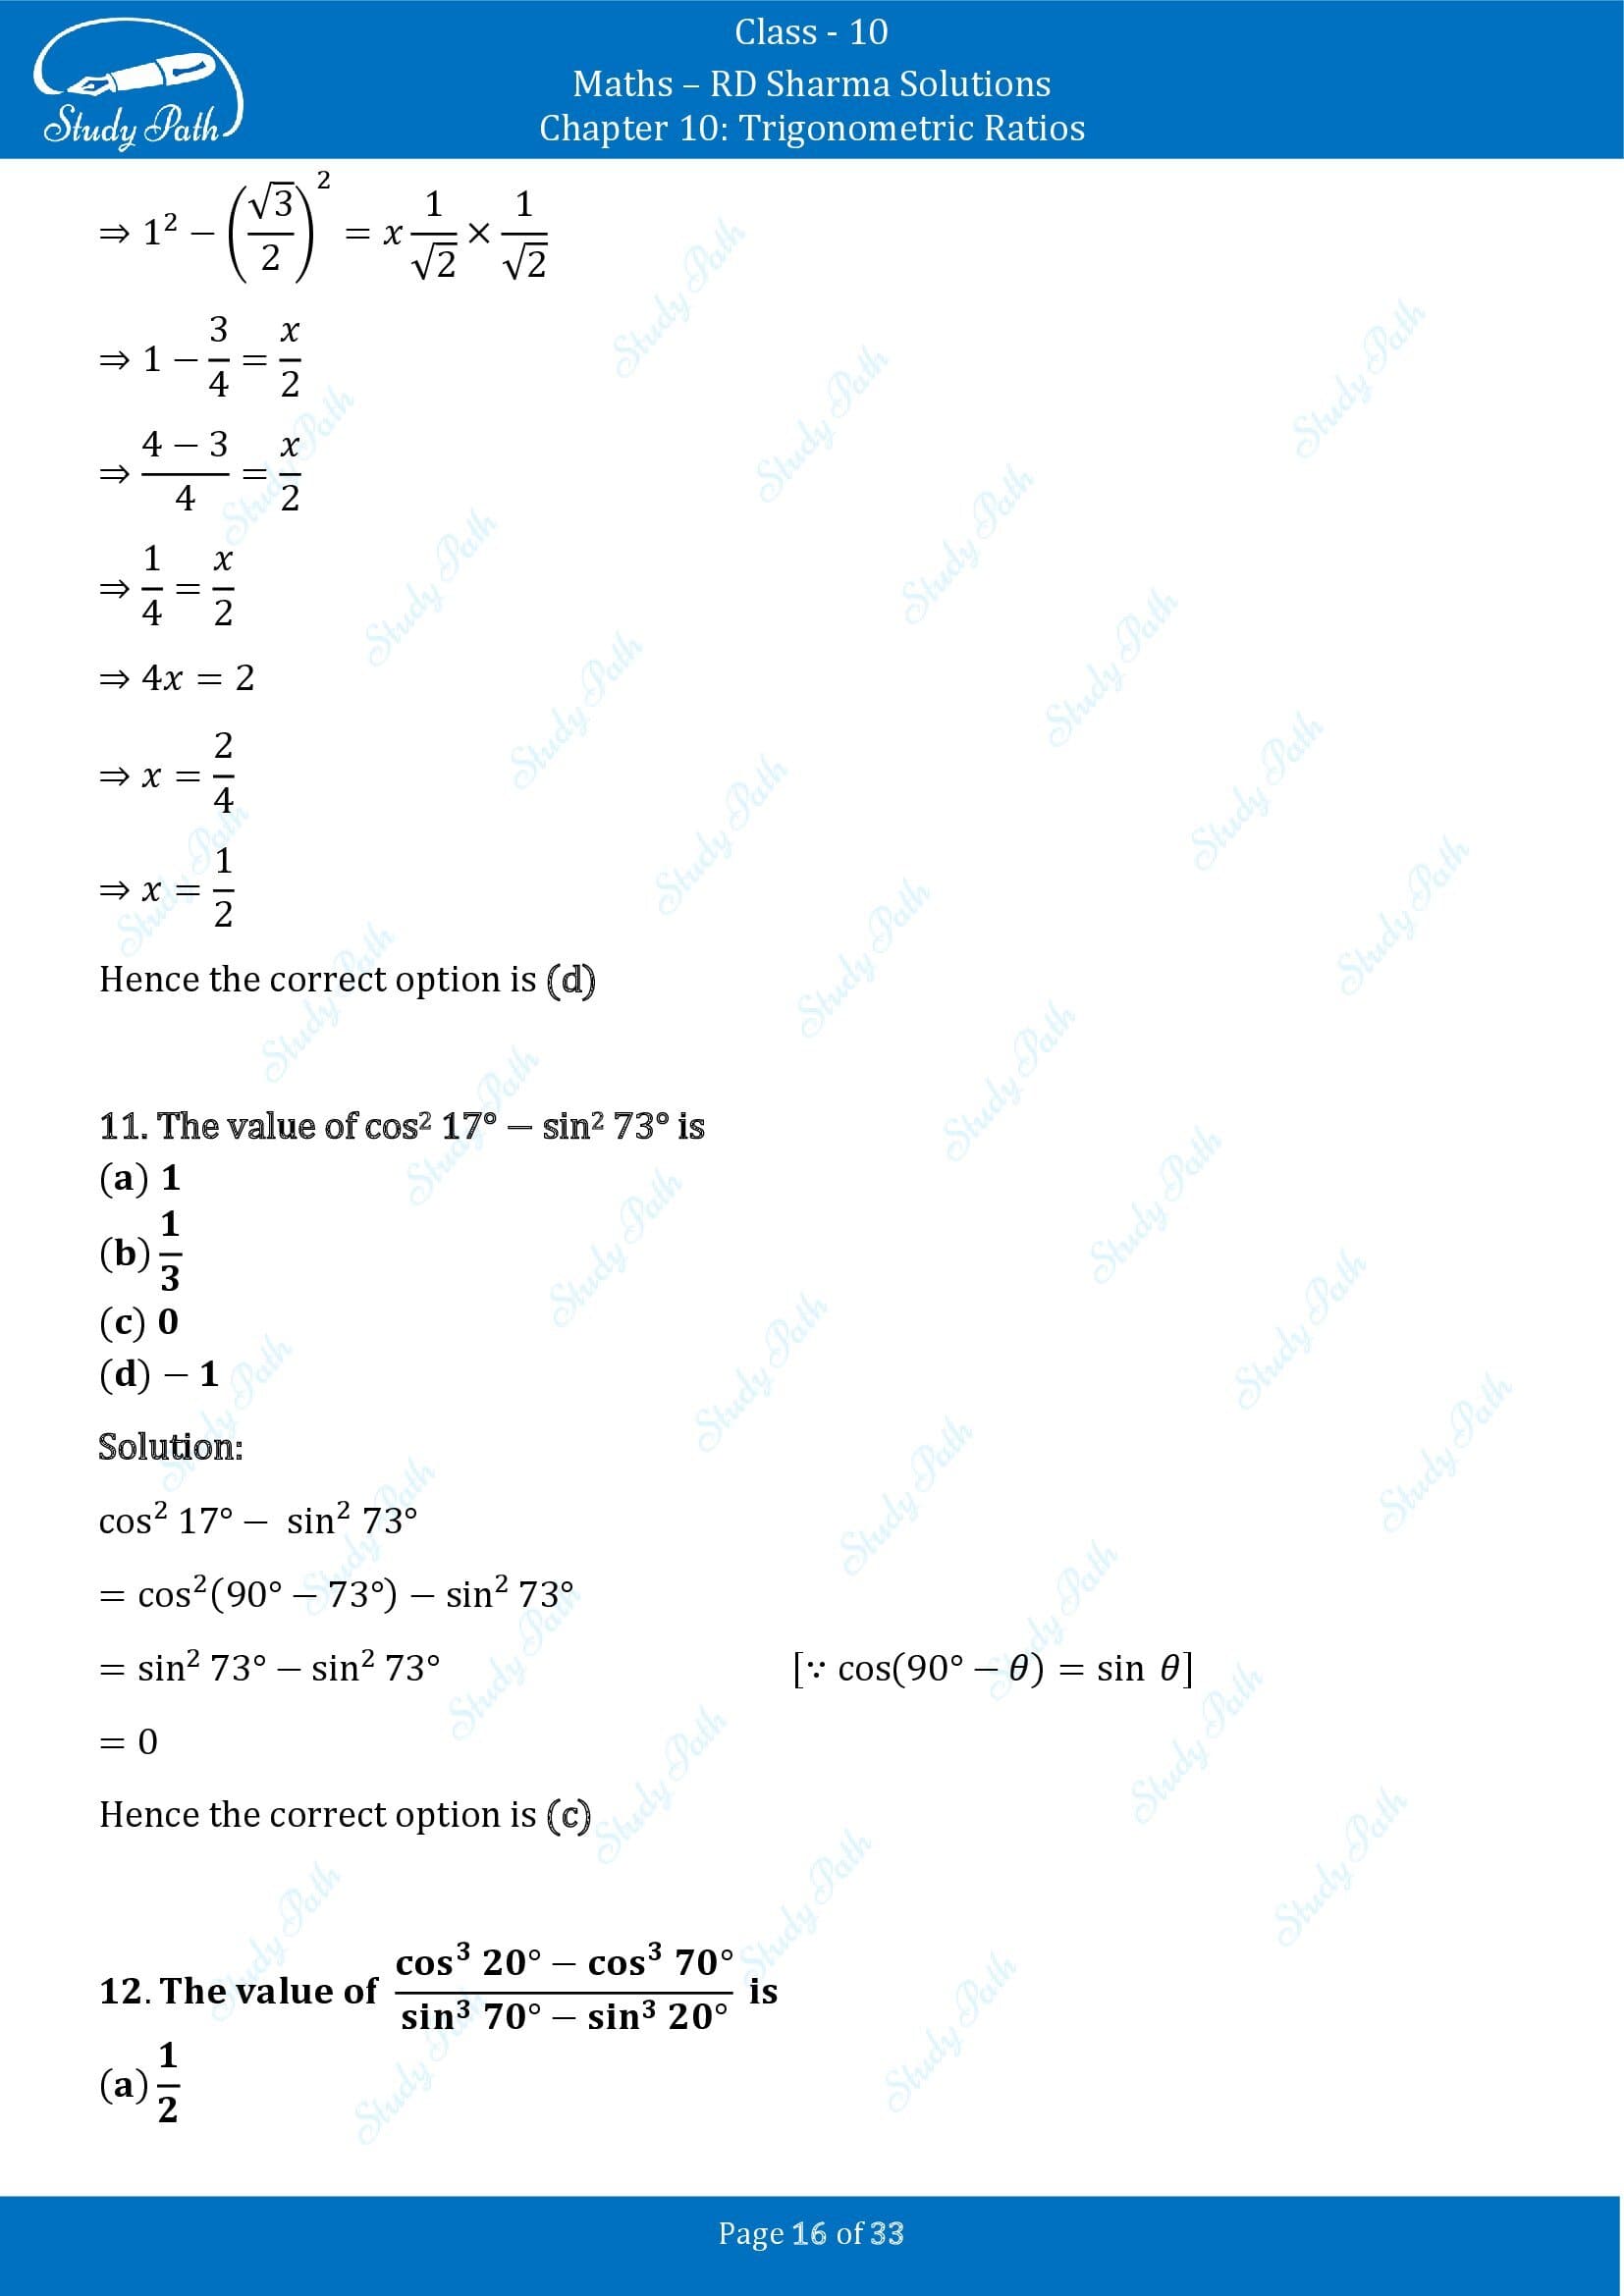 RD Sharma Solutions Class 10 Chapter 10 Trigonometric Ratios Multiple Choice Question MCQs 00016